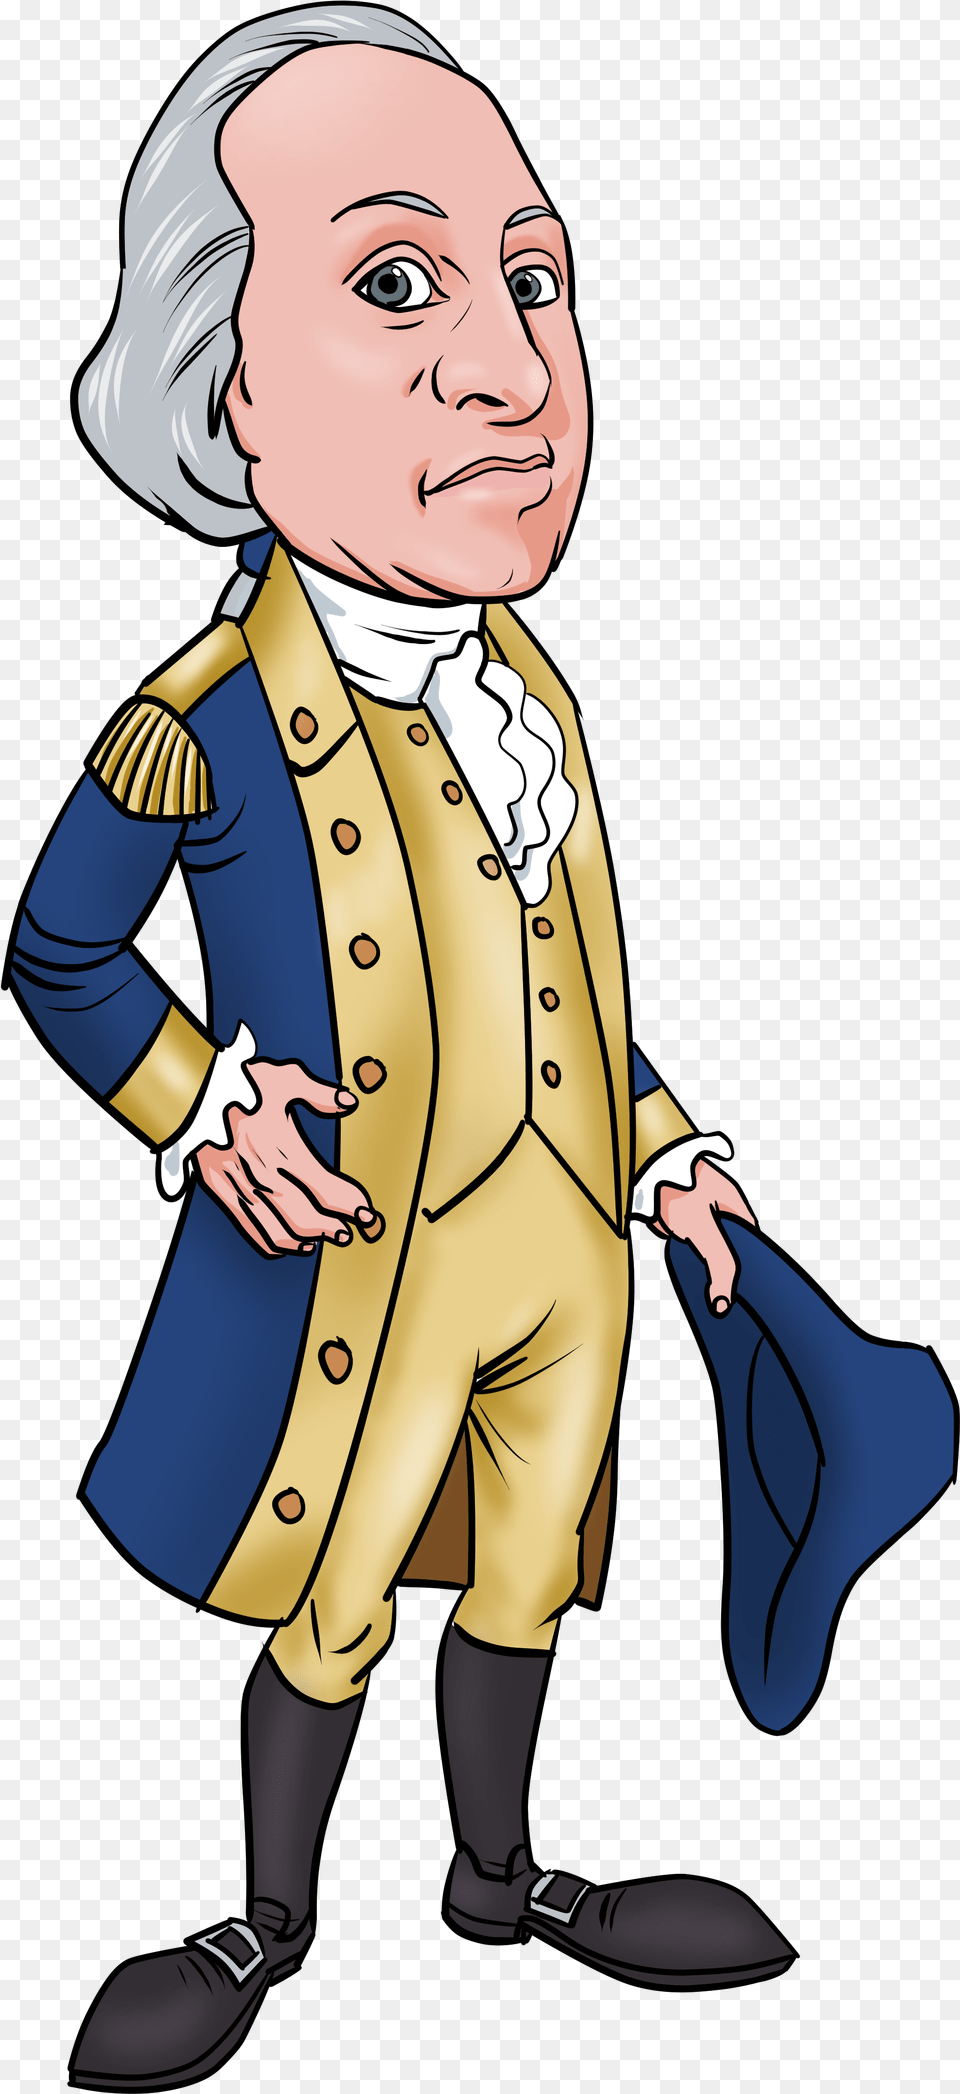 George Washington Image Cartoon Version Of George Washington, Clothing, Coat, Adult, Person Free Png